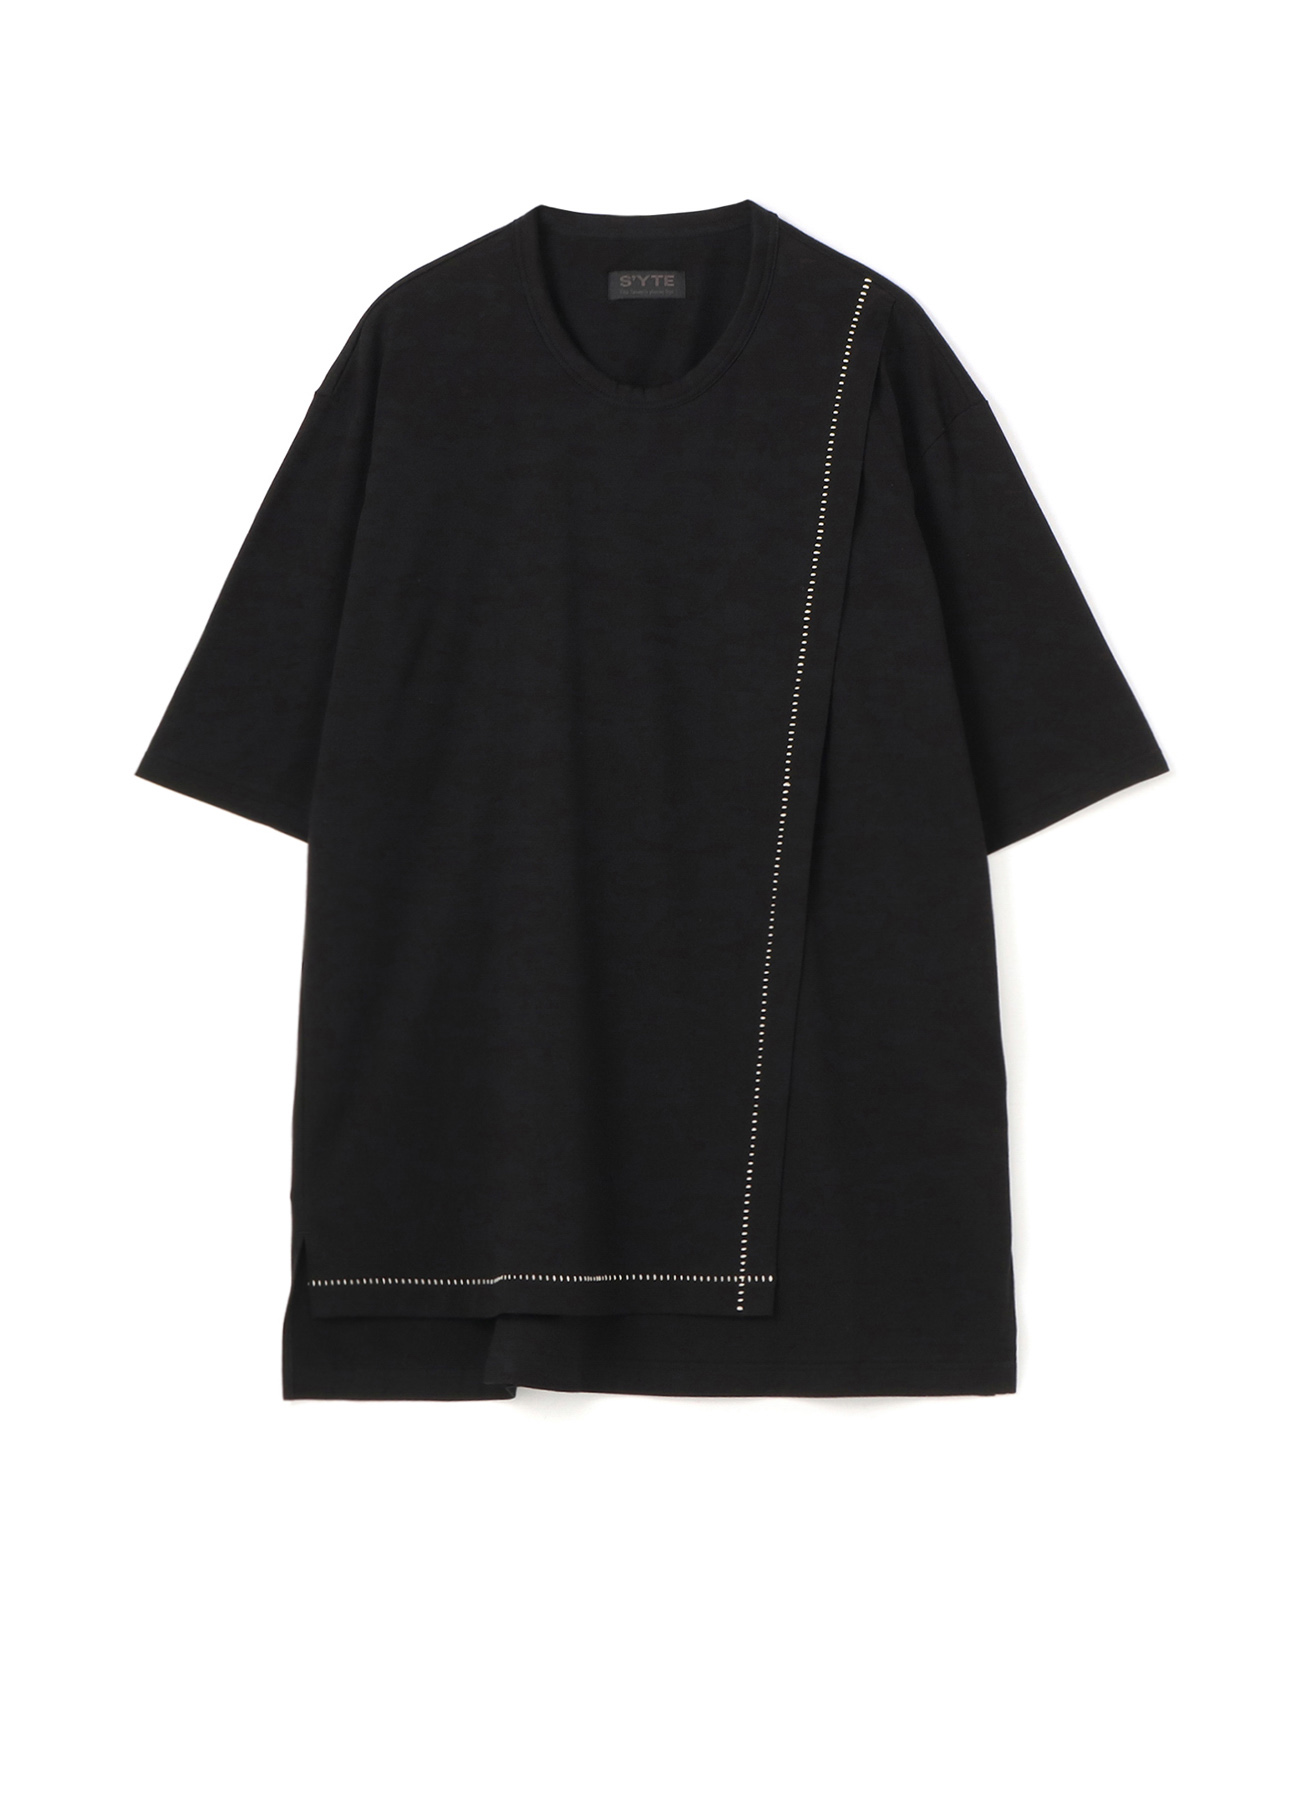 40/2 Cotton Jersey Crew Neck Half-Layered Color Blind Stitch Short Sleeve T-Shirt